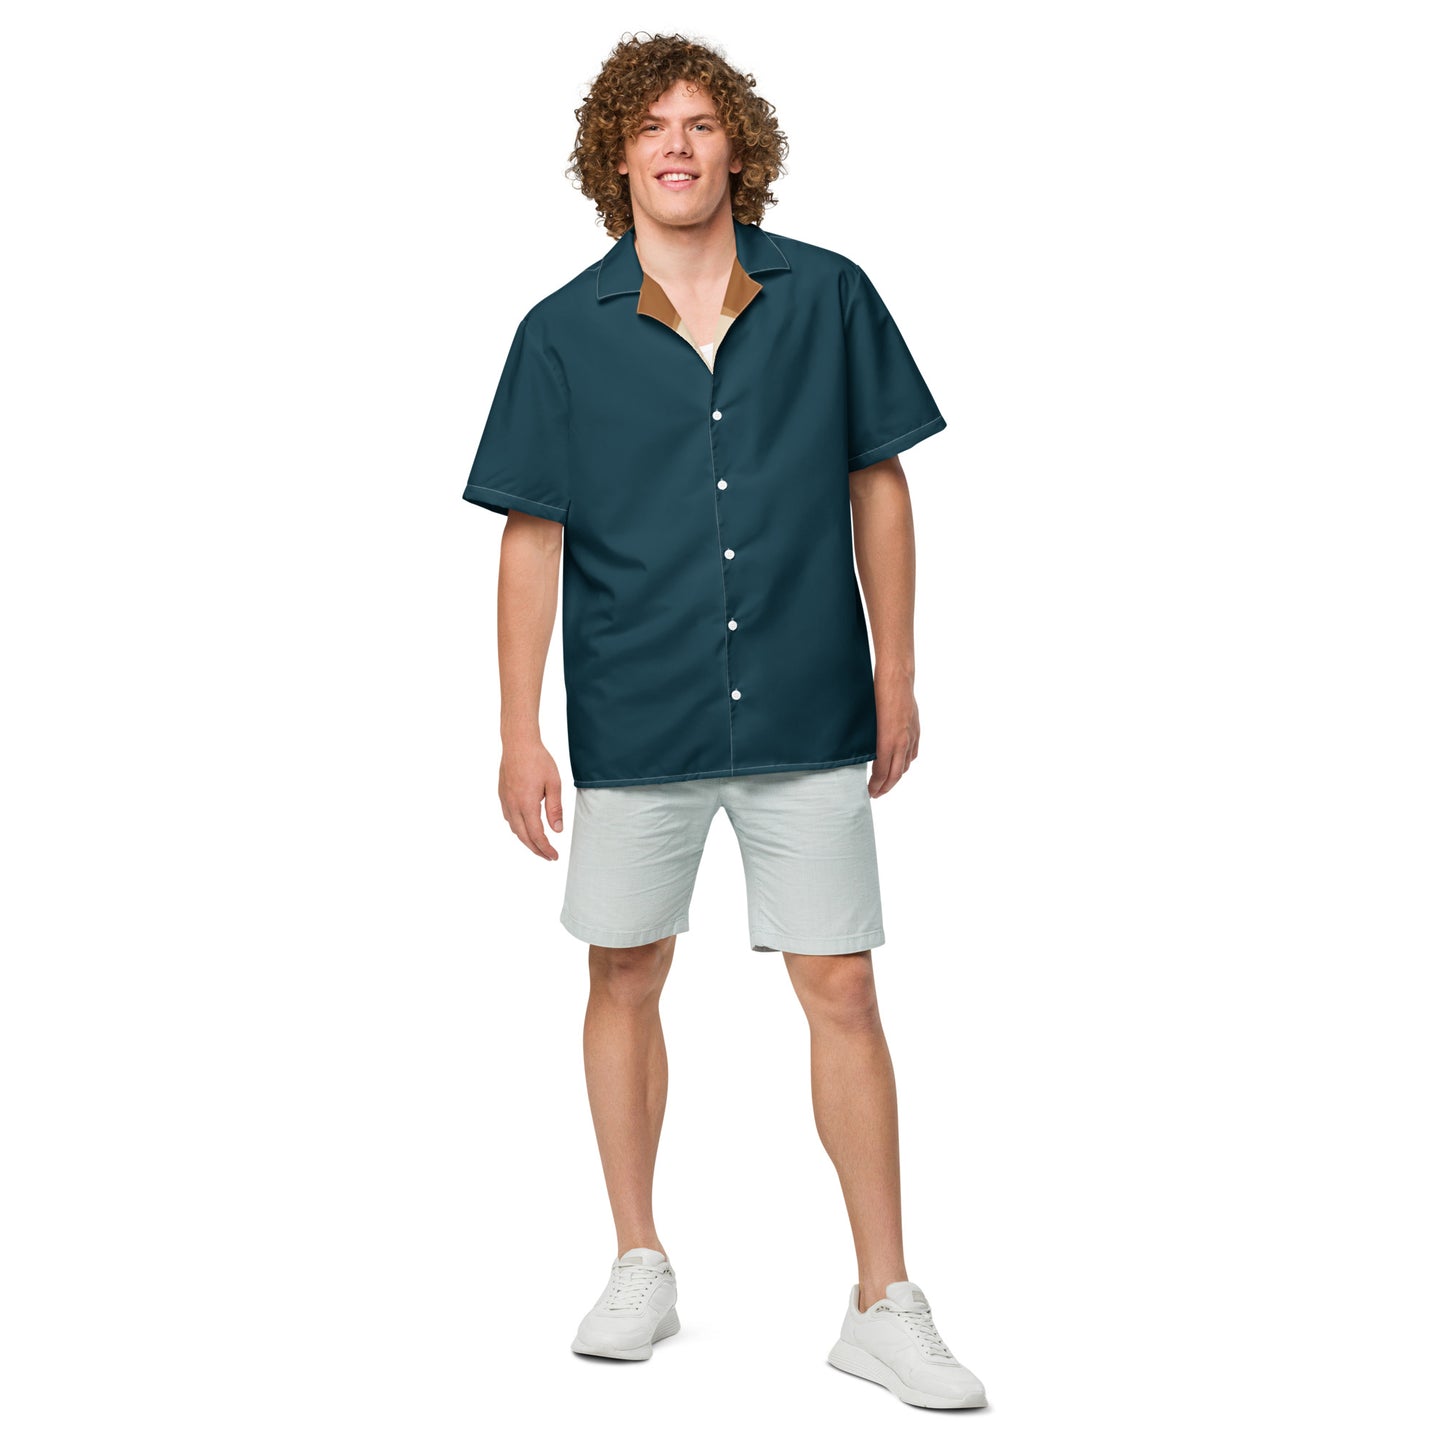 River Valley Gender Neutral Button Sun Shirt